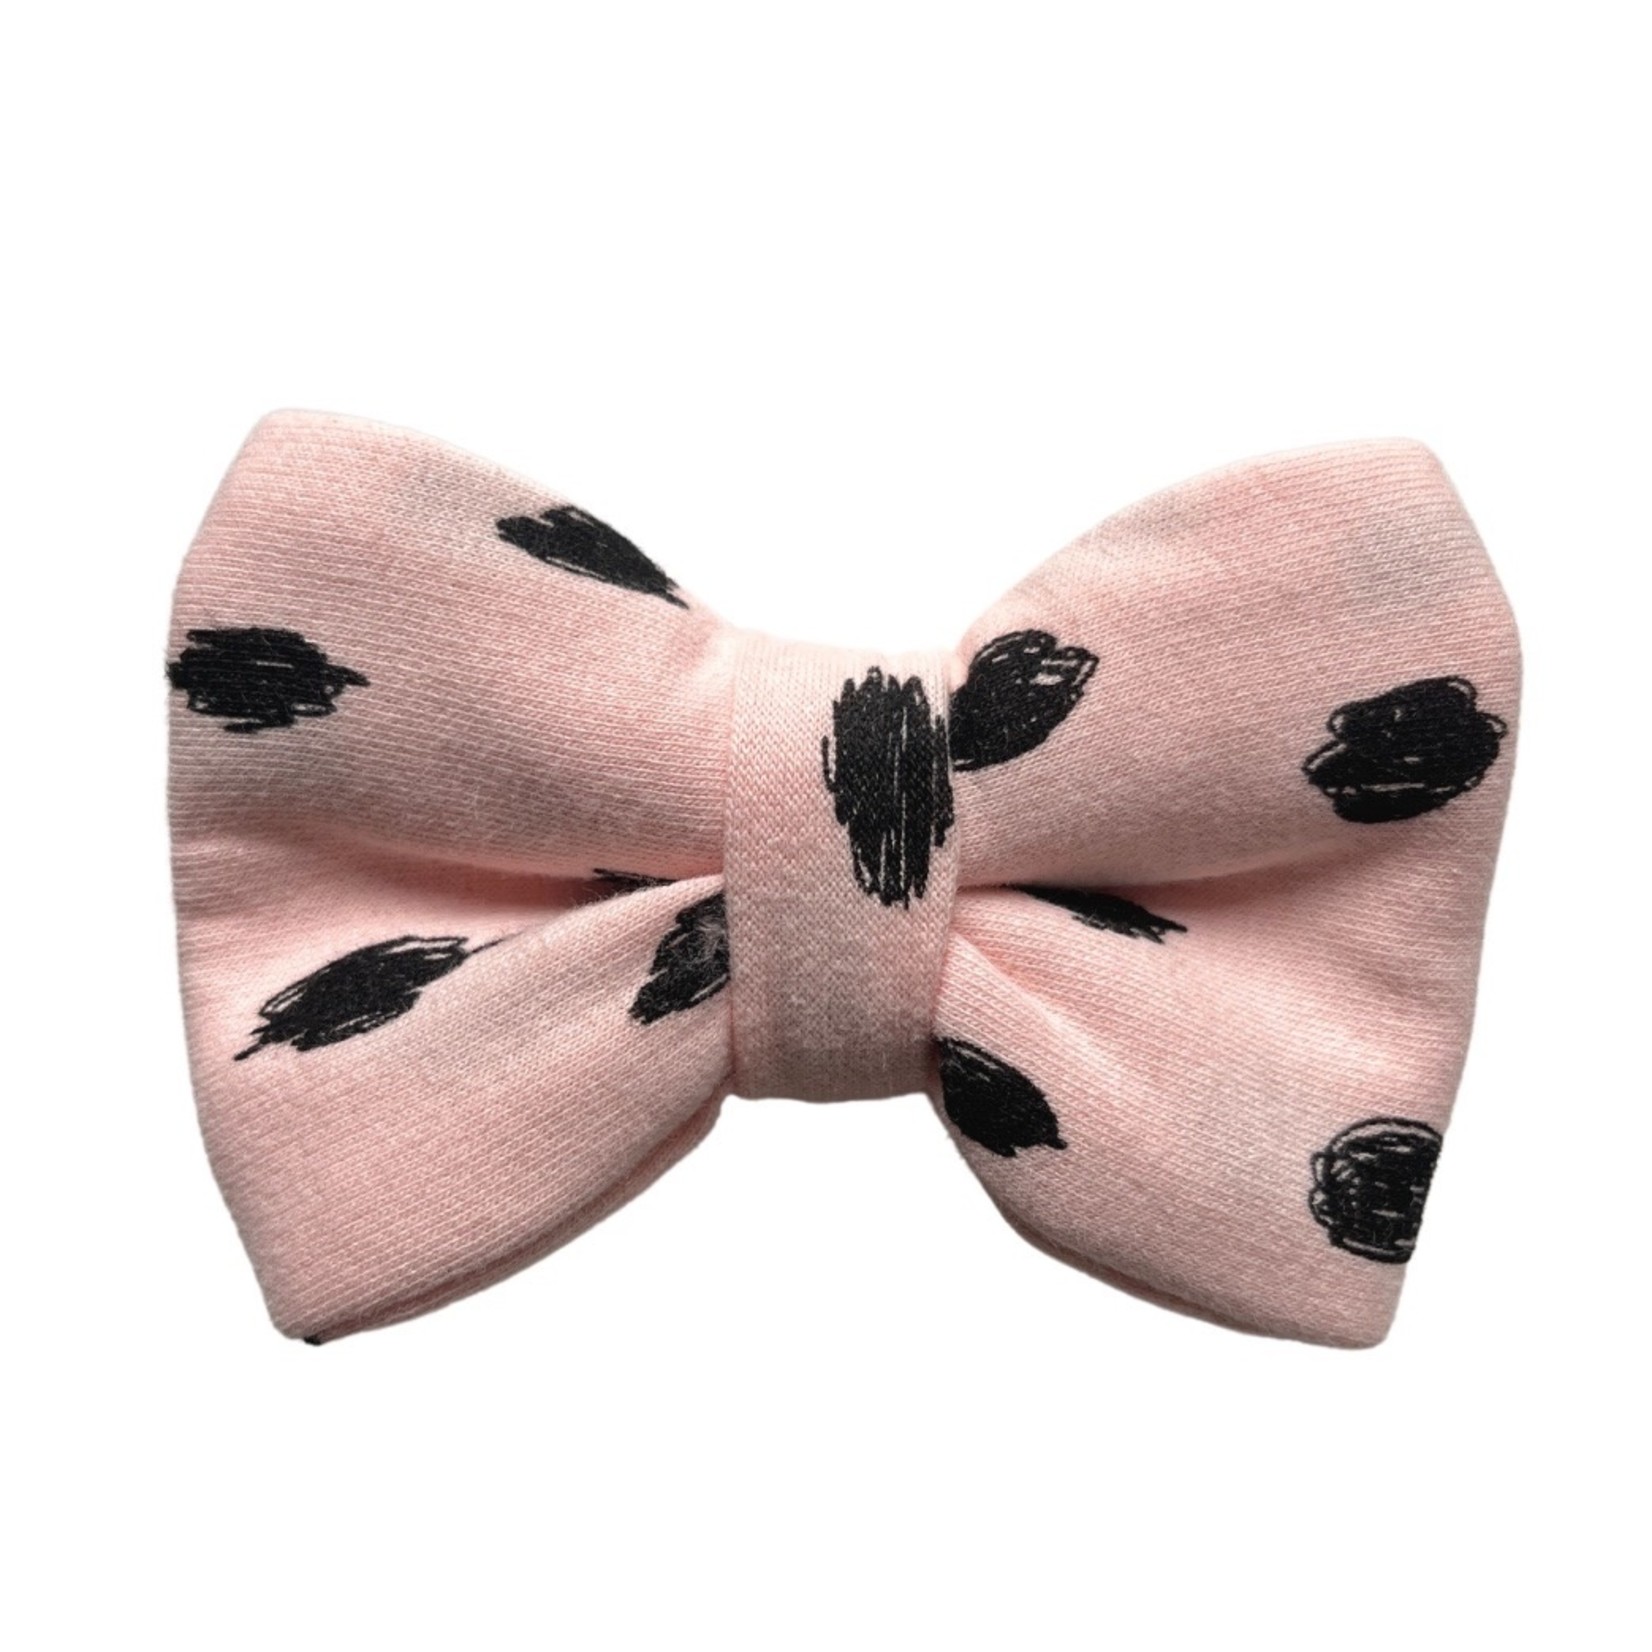 Pink dot bowtie